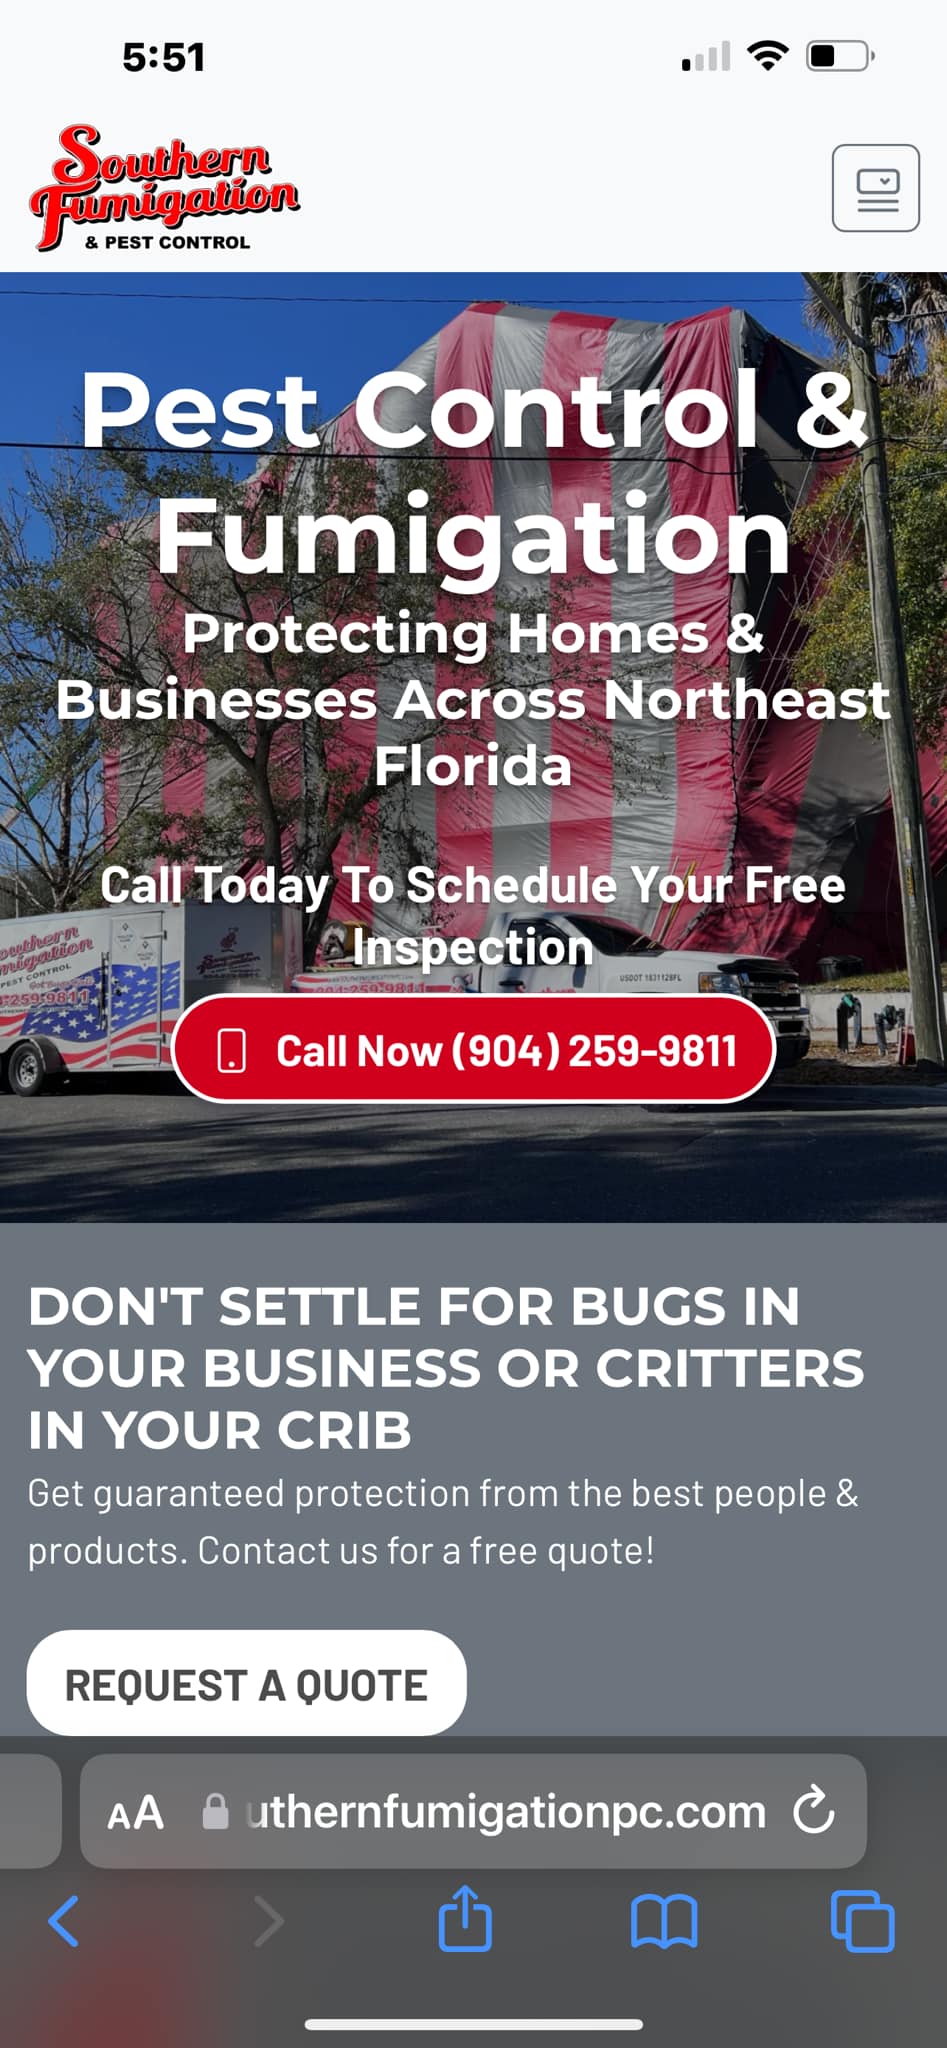 Southern Fumigation and Pest Control, Inc. 522 E Macclenny Ave, Macclenny Florida 32063